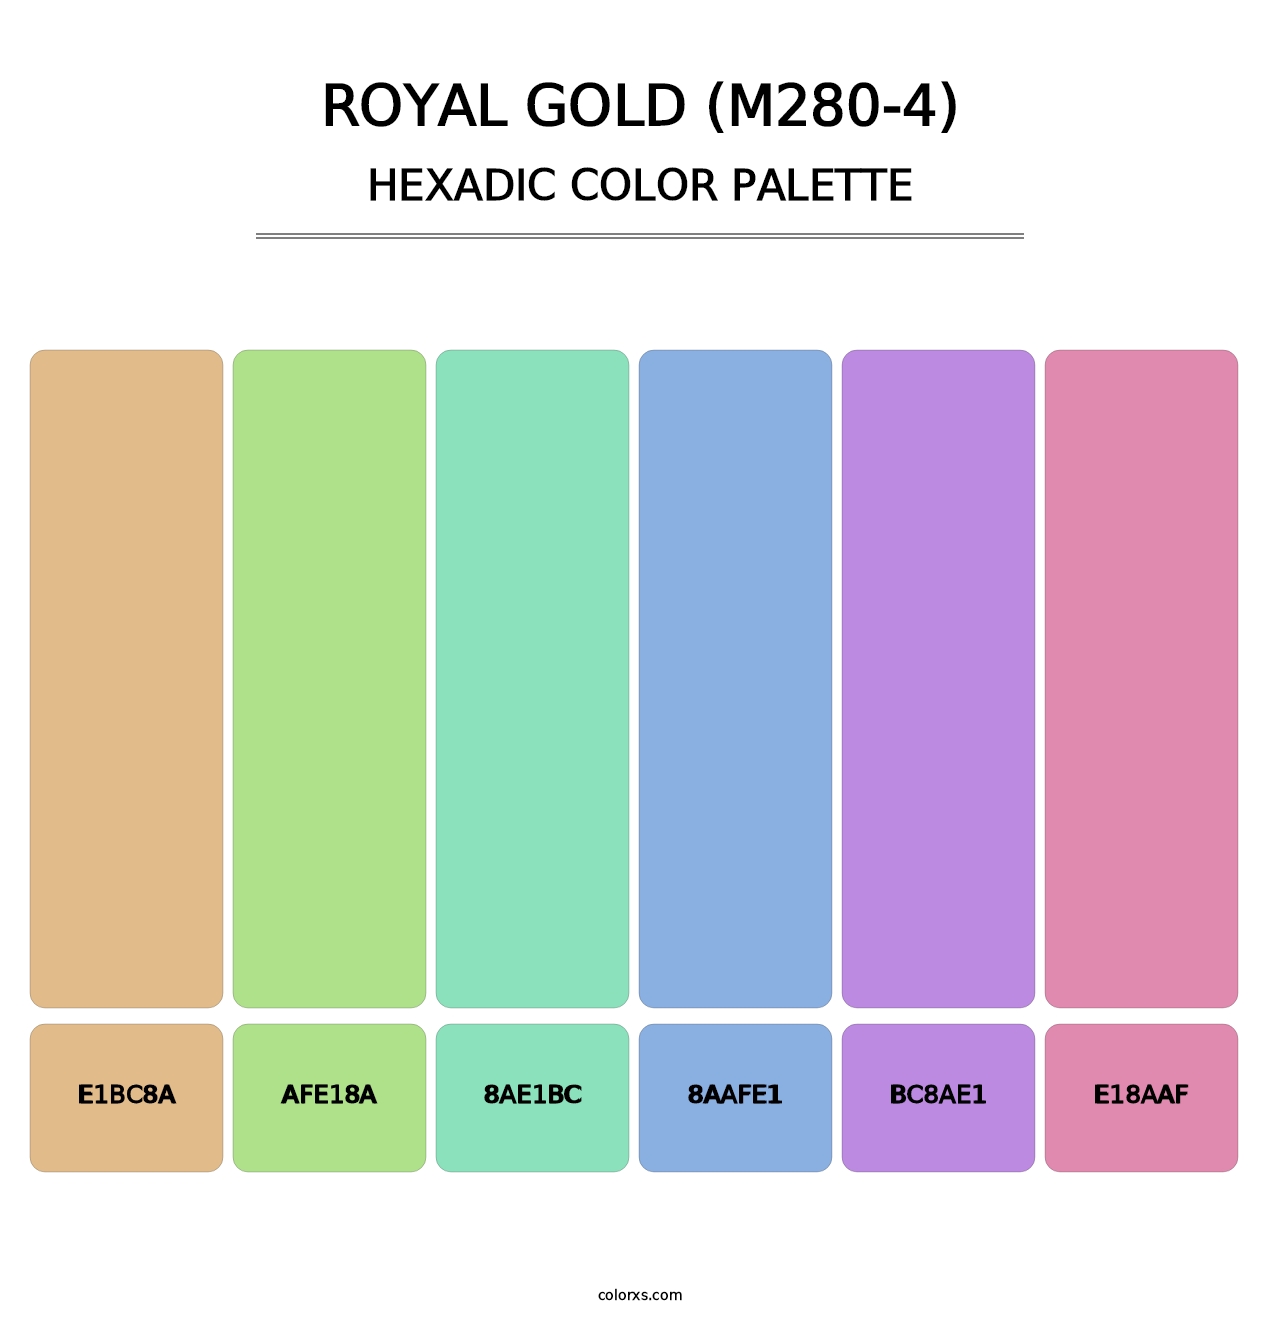 Royal Gold (M280-4) - Hexadic Color Palette